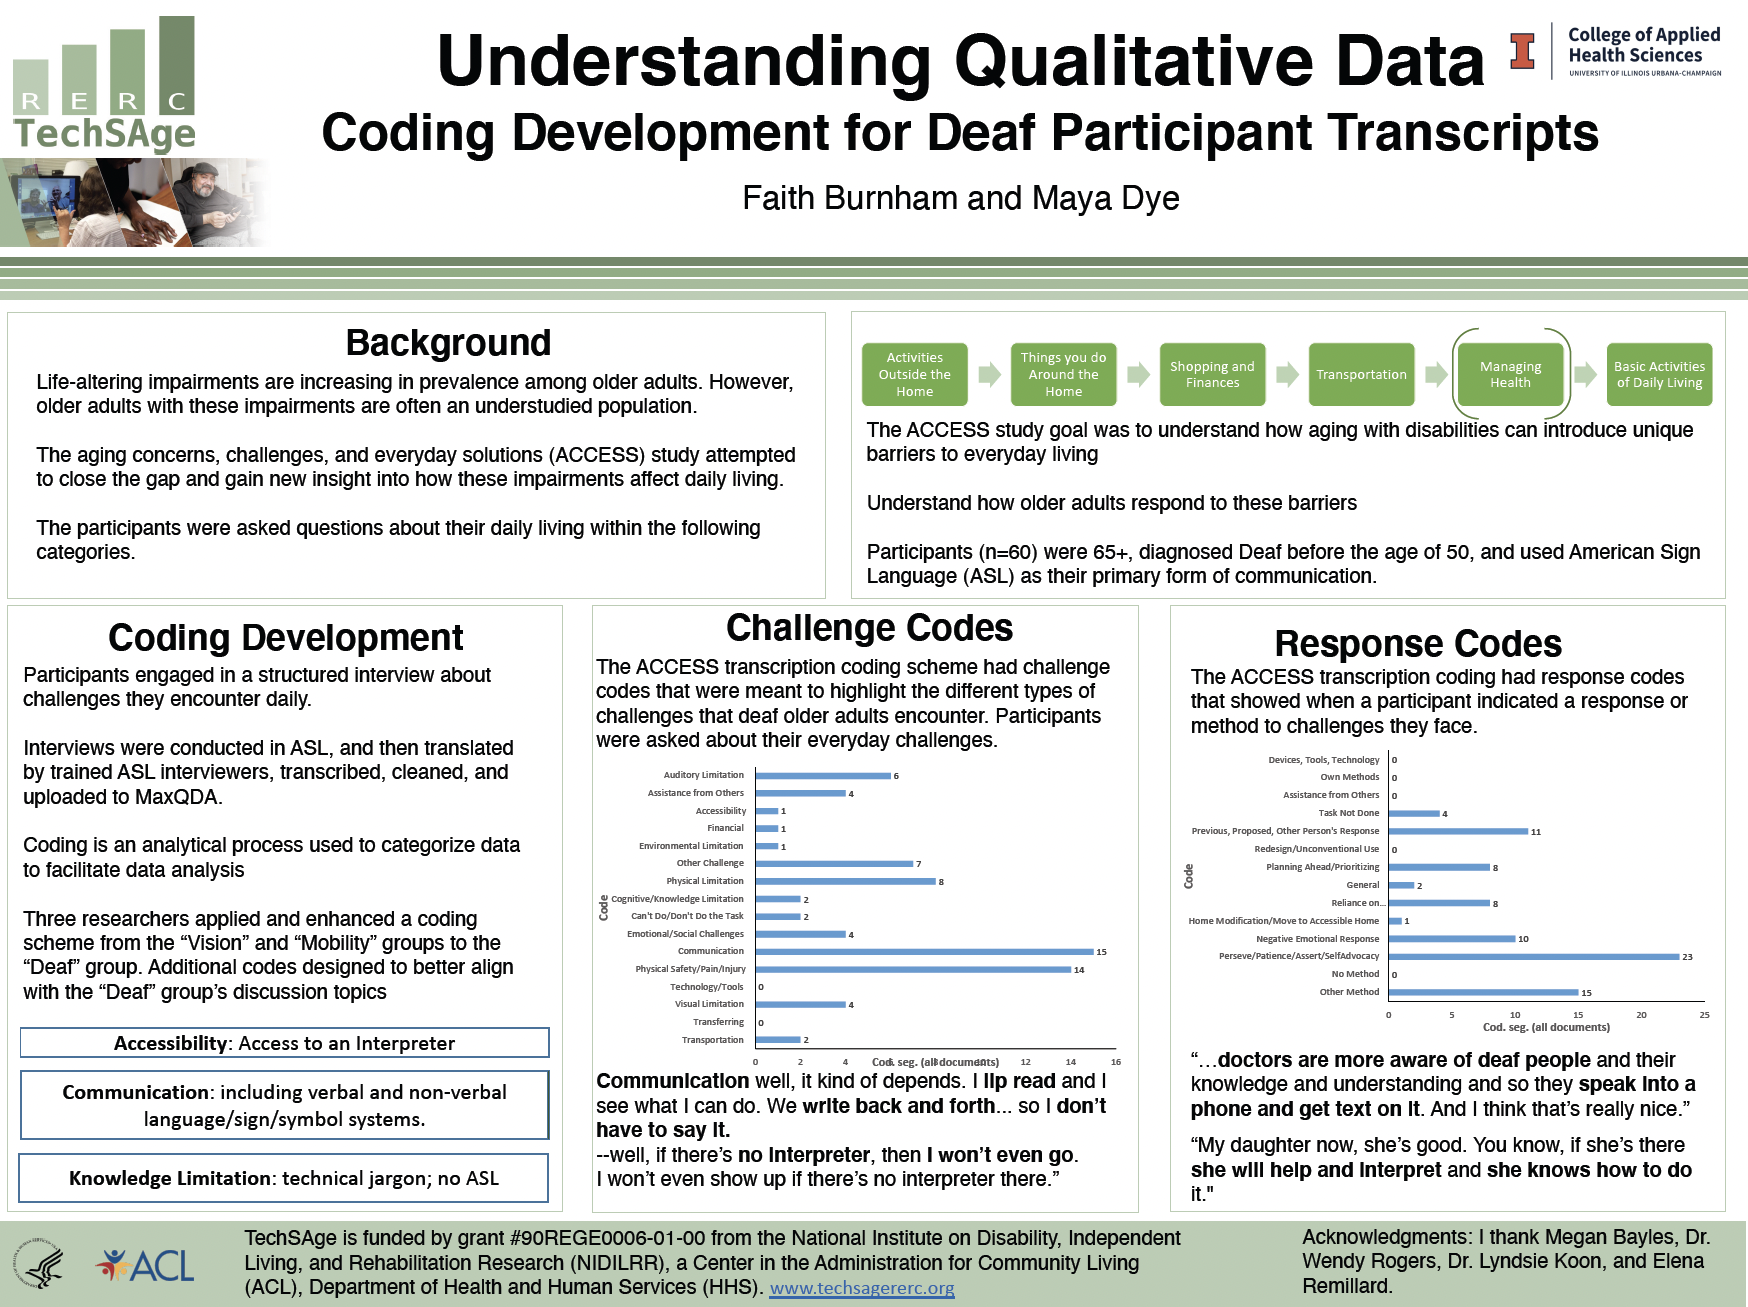 Screenshot of poster "Understanding Qualitative Data Coding Development for Deaf Participant Transcripts"